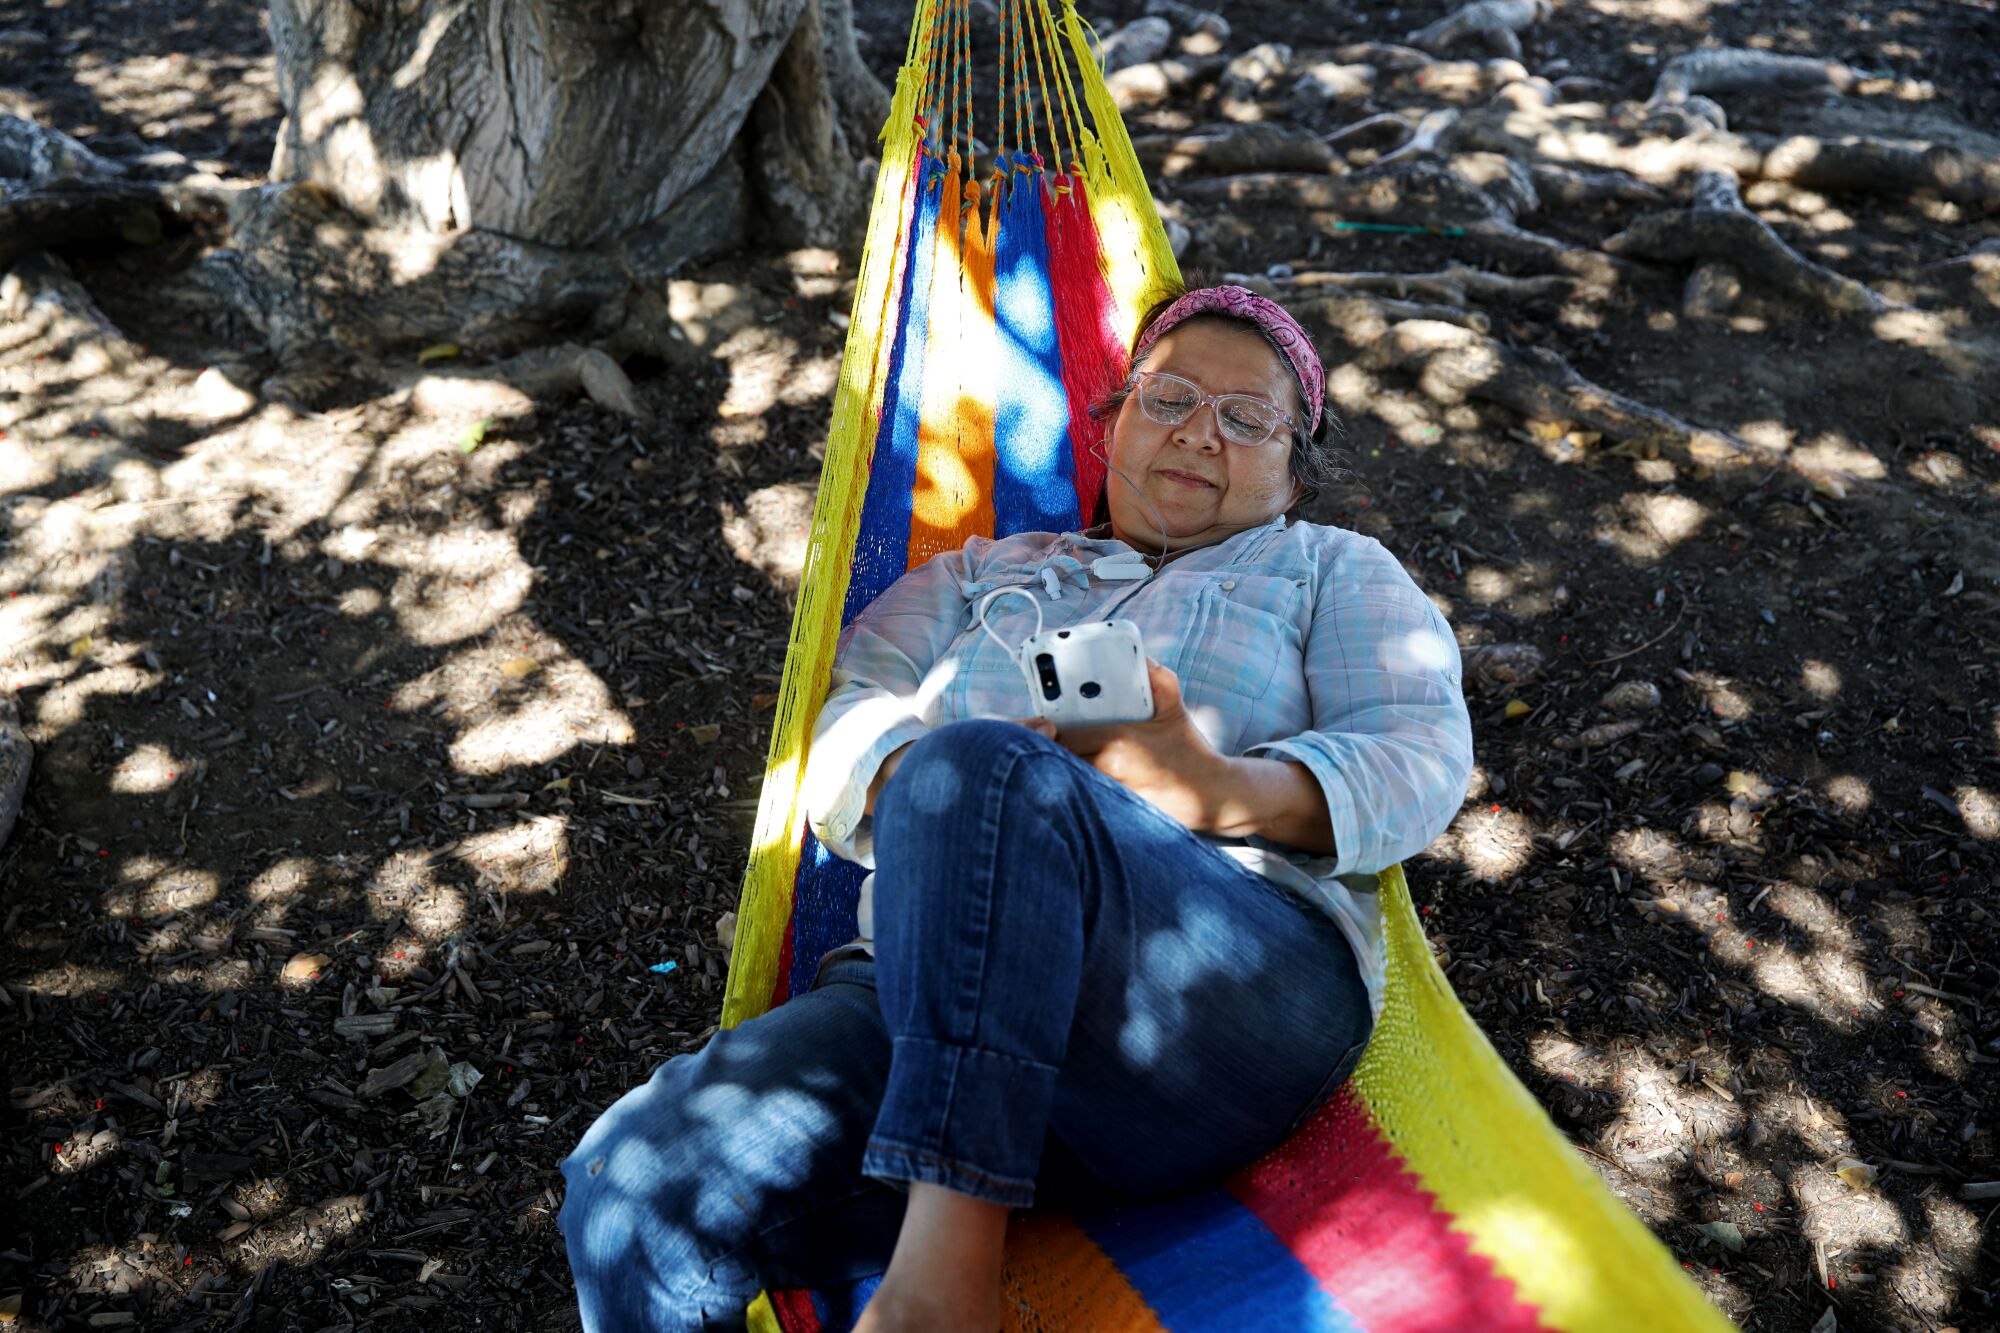 Blanca Bonoso hung a hammock to cool off at Magic Johnson Park in Willowbrook 